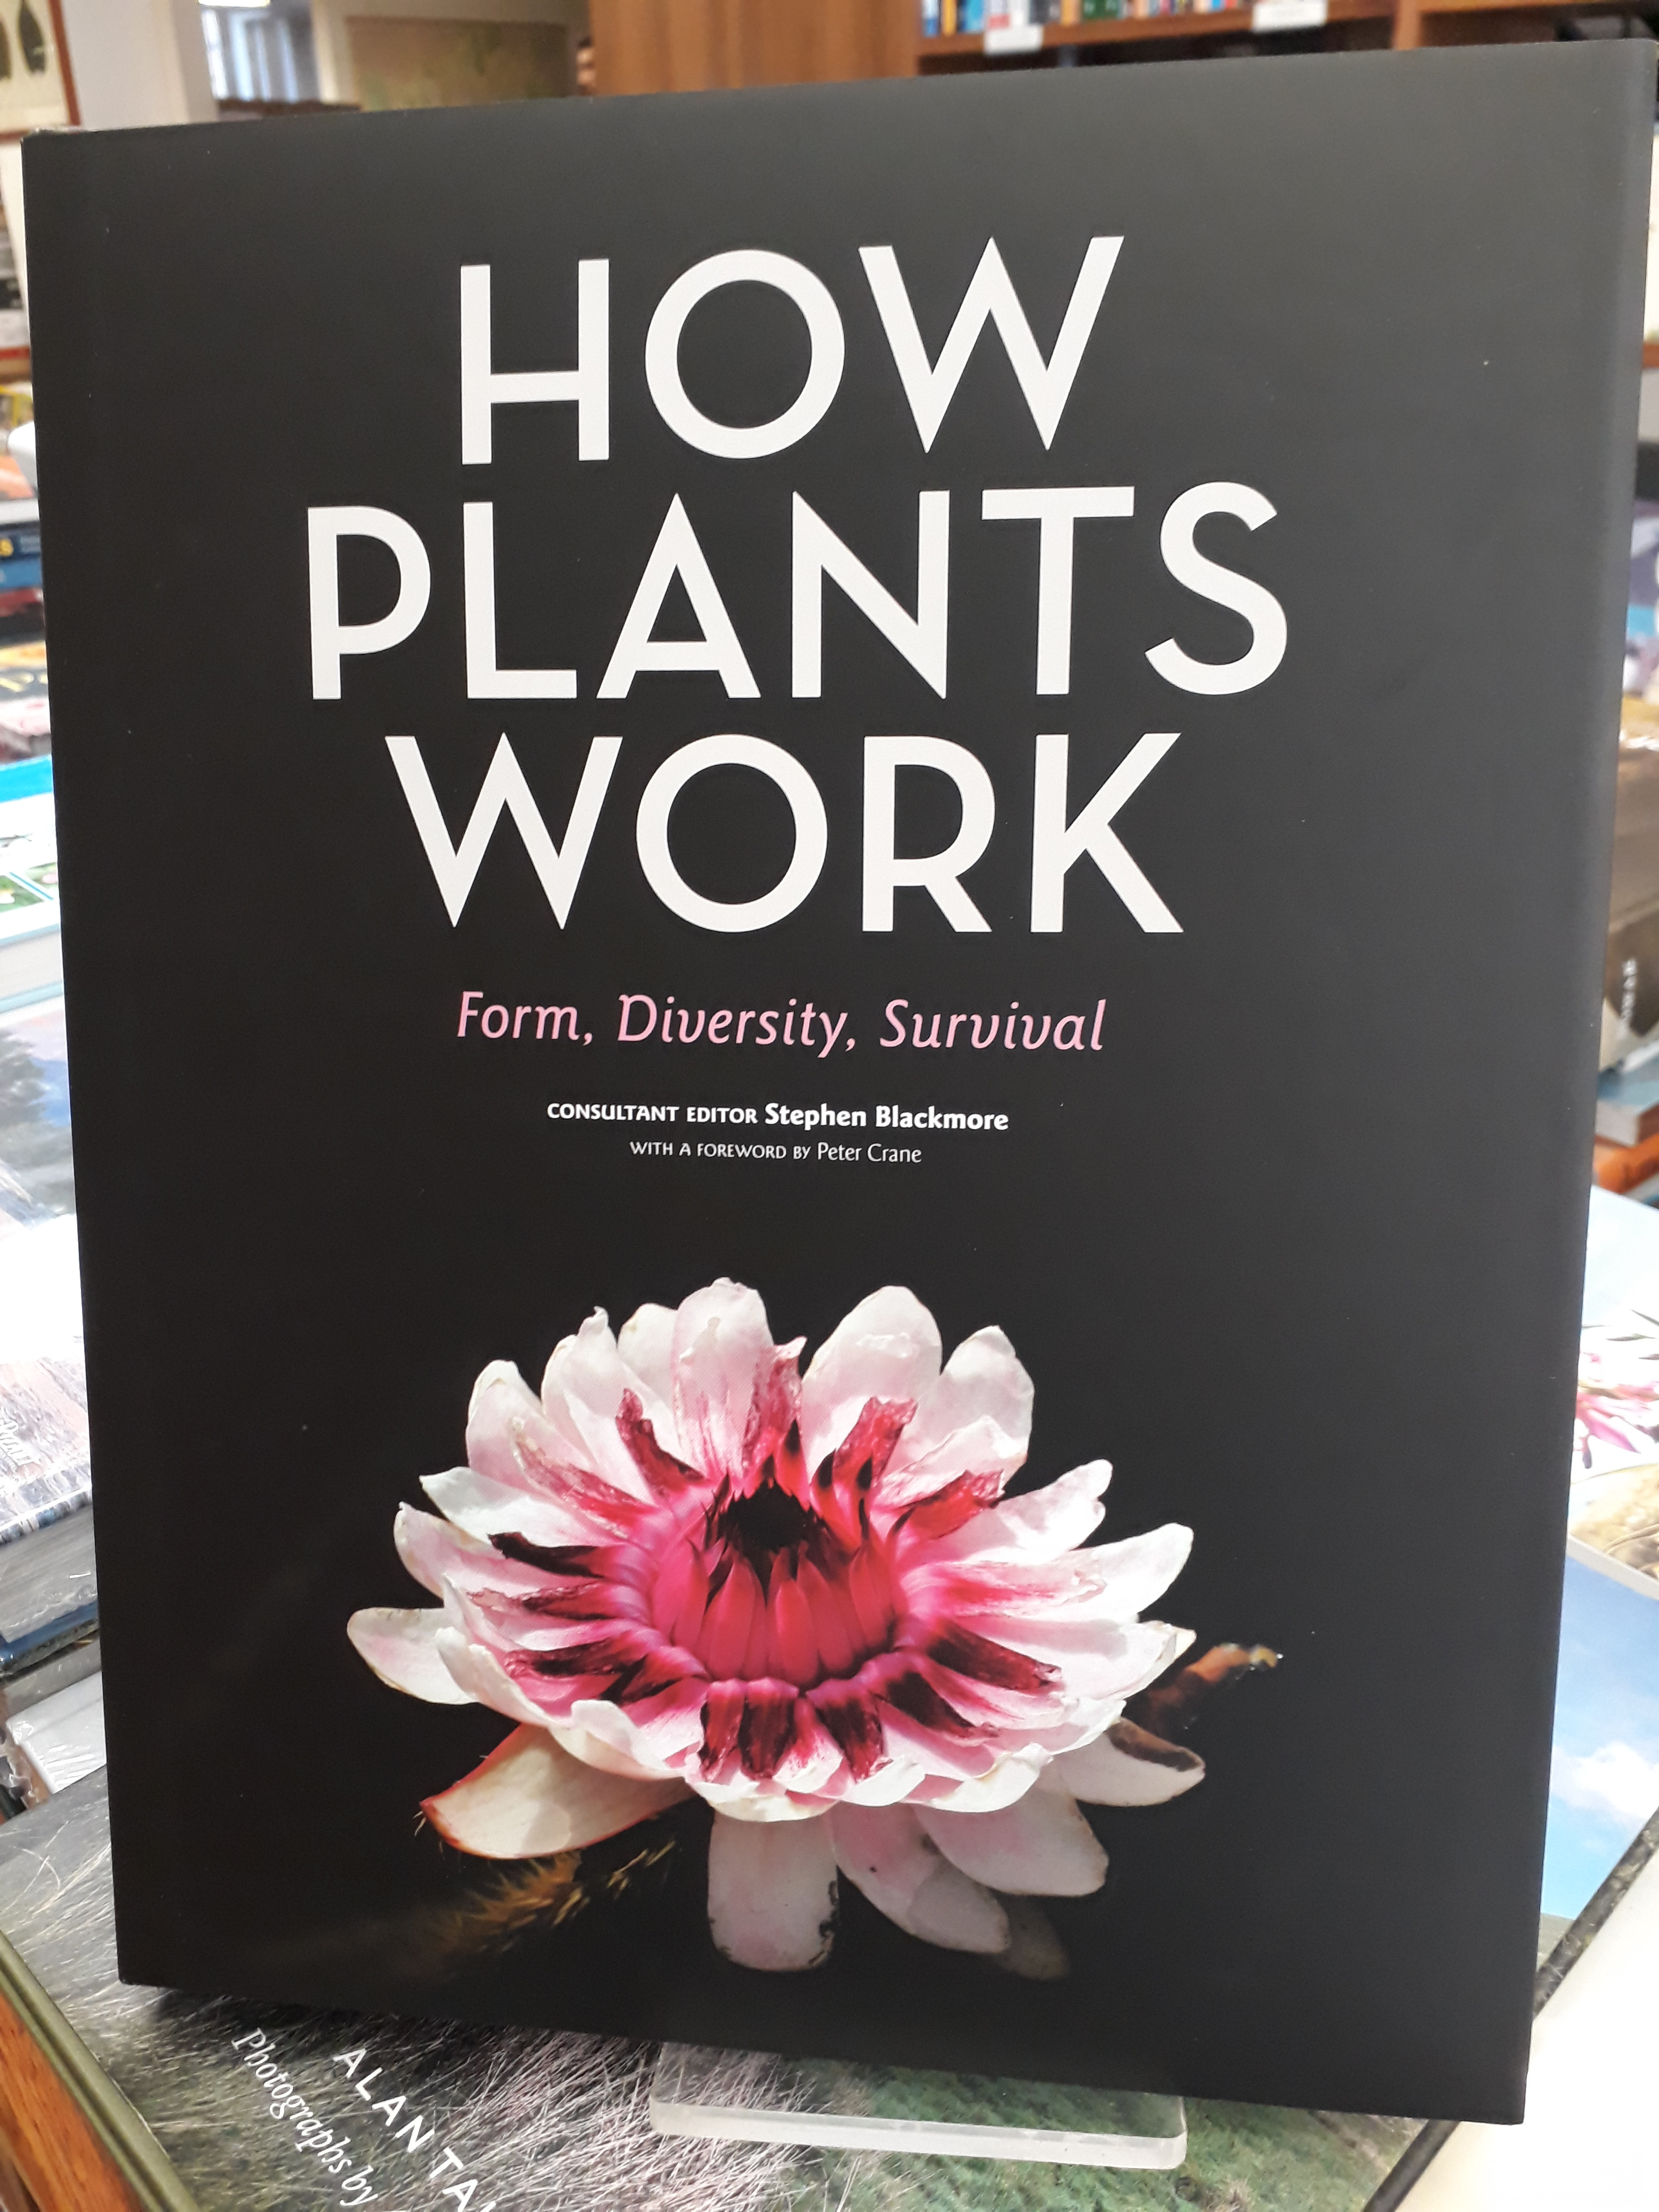 HOW PLANTS WORK